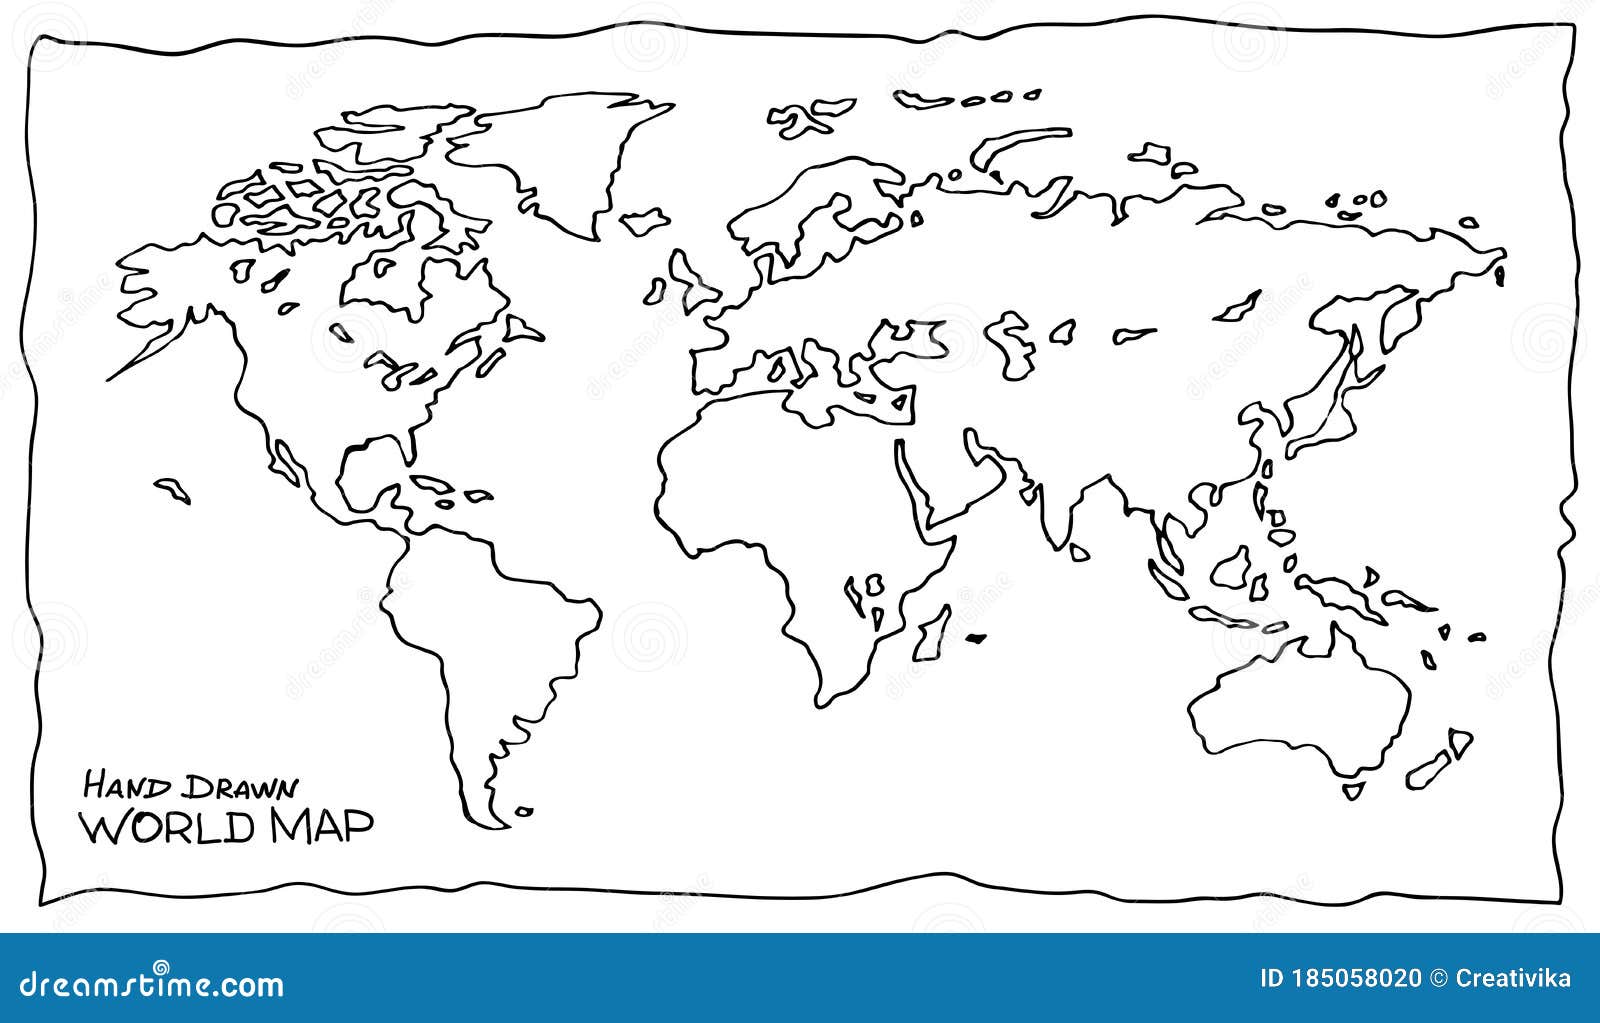 Premium Vector | Hand drawn world map drawing by pencil-saigonsouth.com.vn